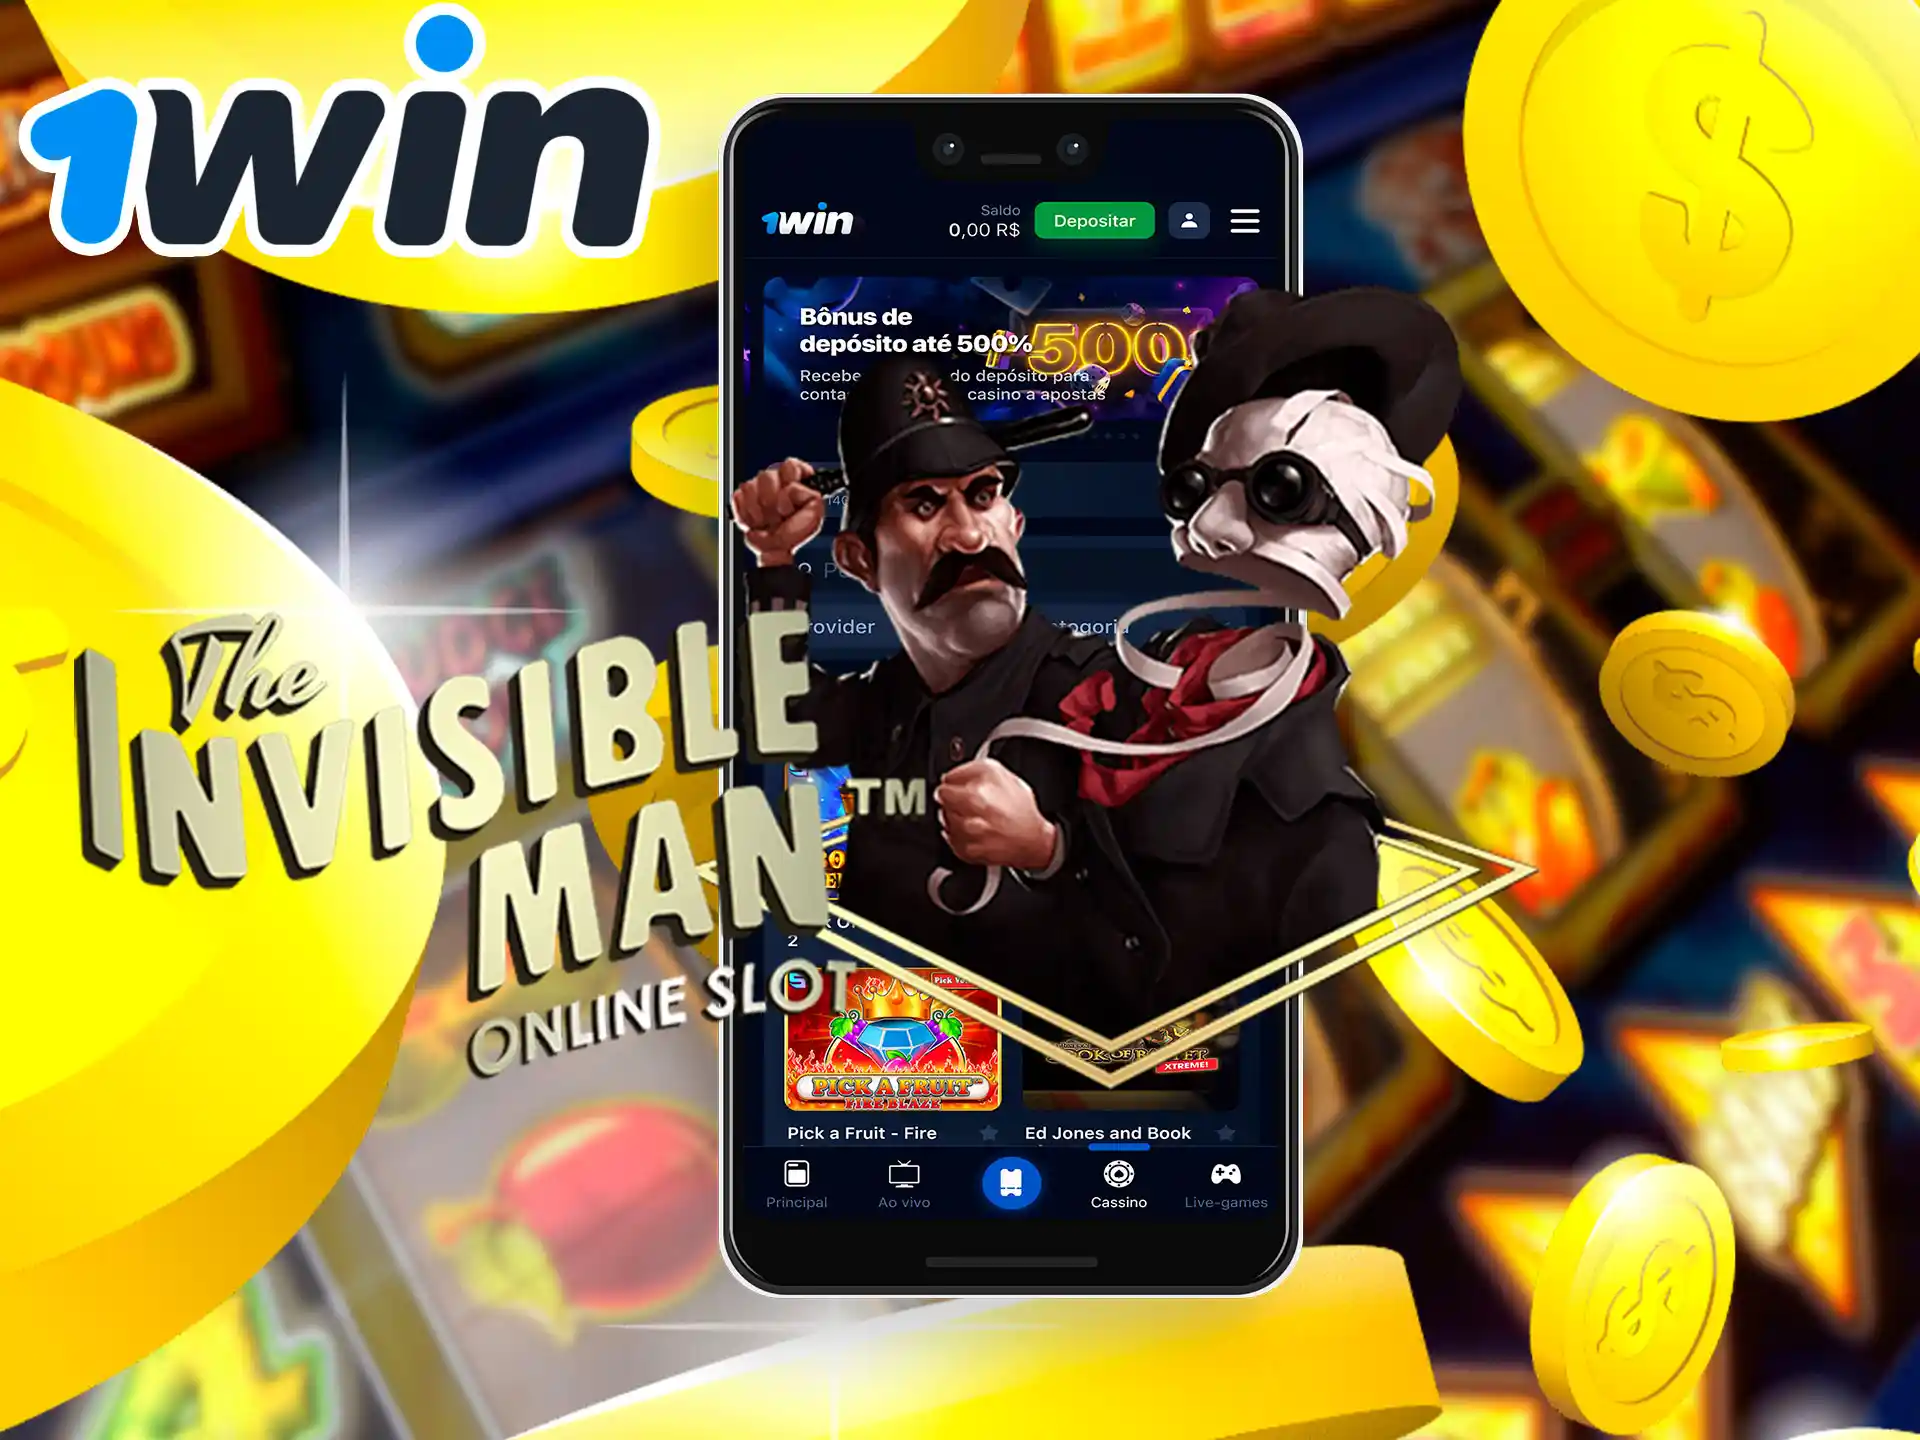 The Invisible Man jogo.